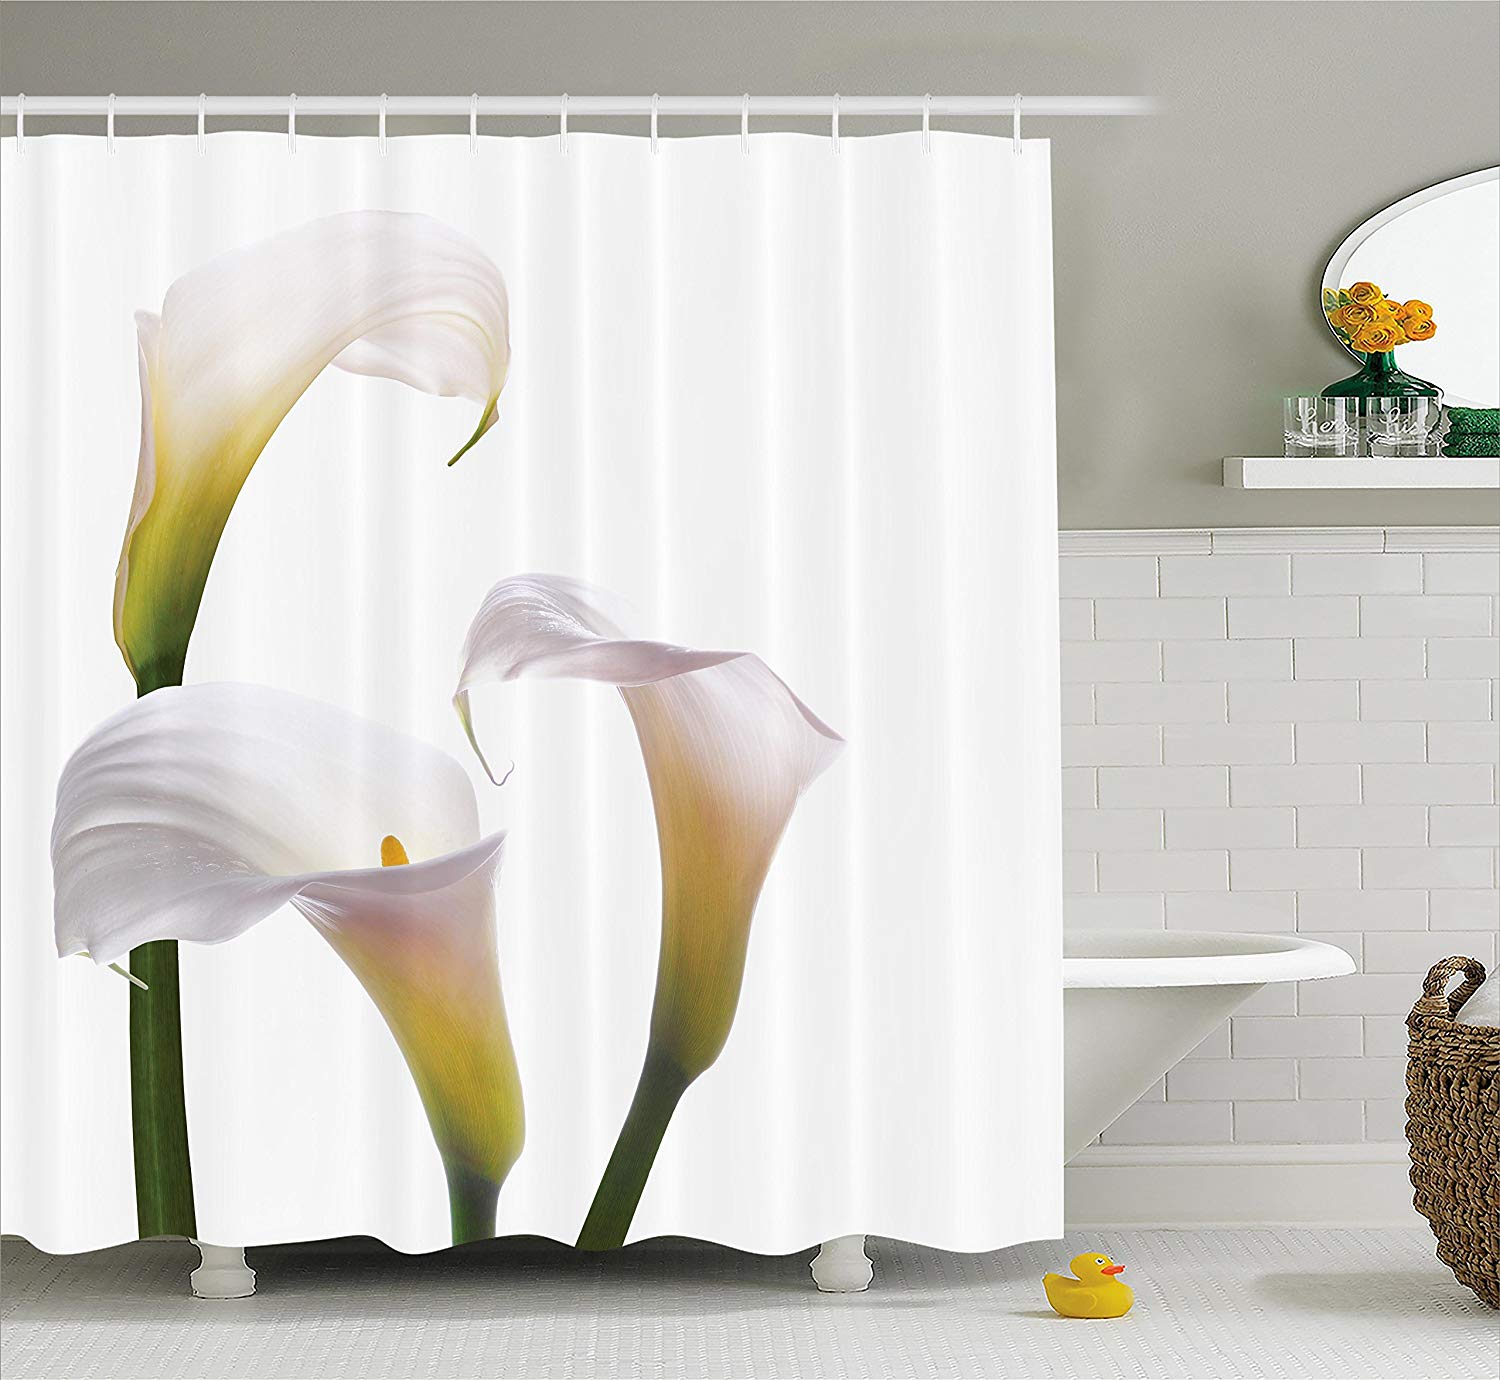 Flower Shower Curtain Flourishing Calla Lilies on White Fresh Spring Bouquet Gentle Nature Theme Cloth Fabric Bathroom Decor Set